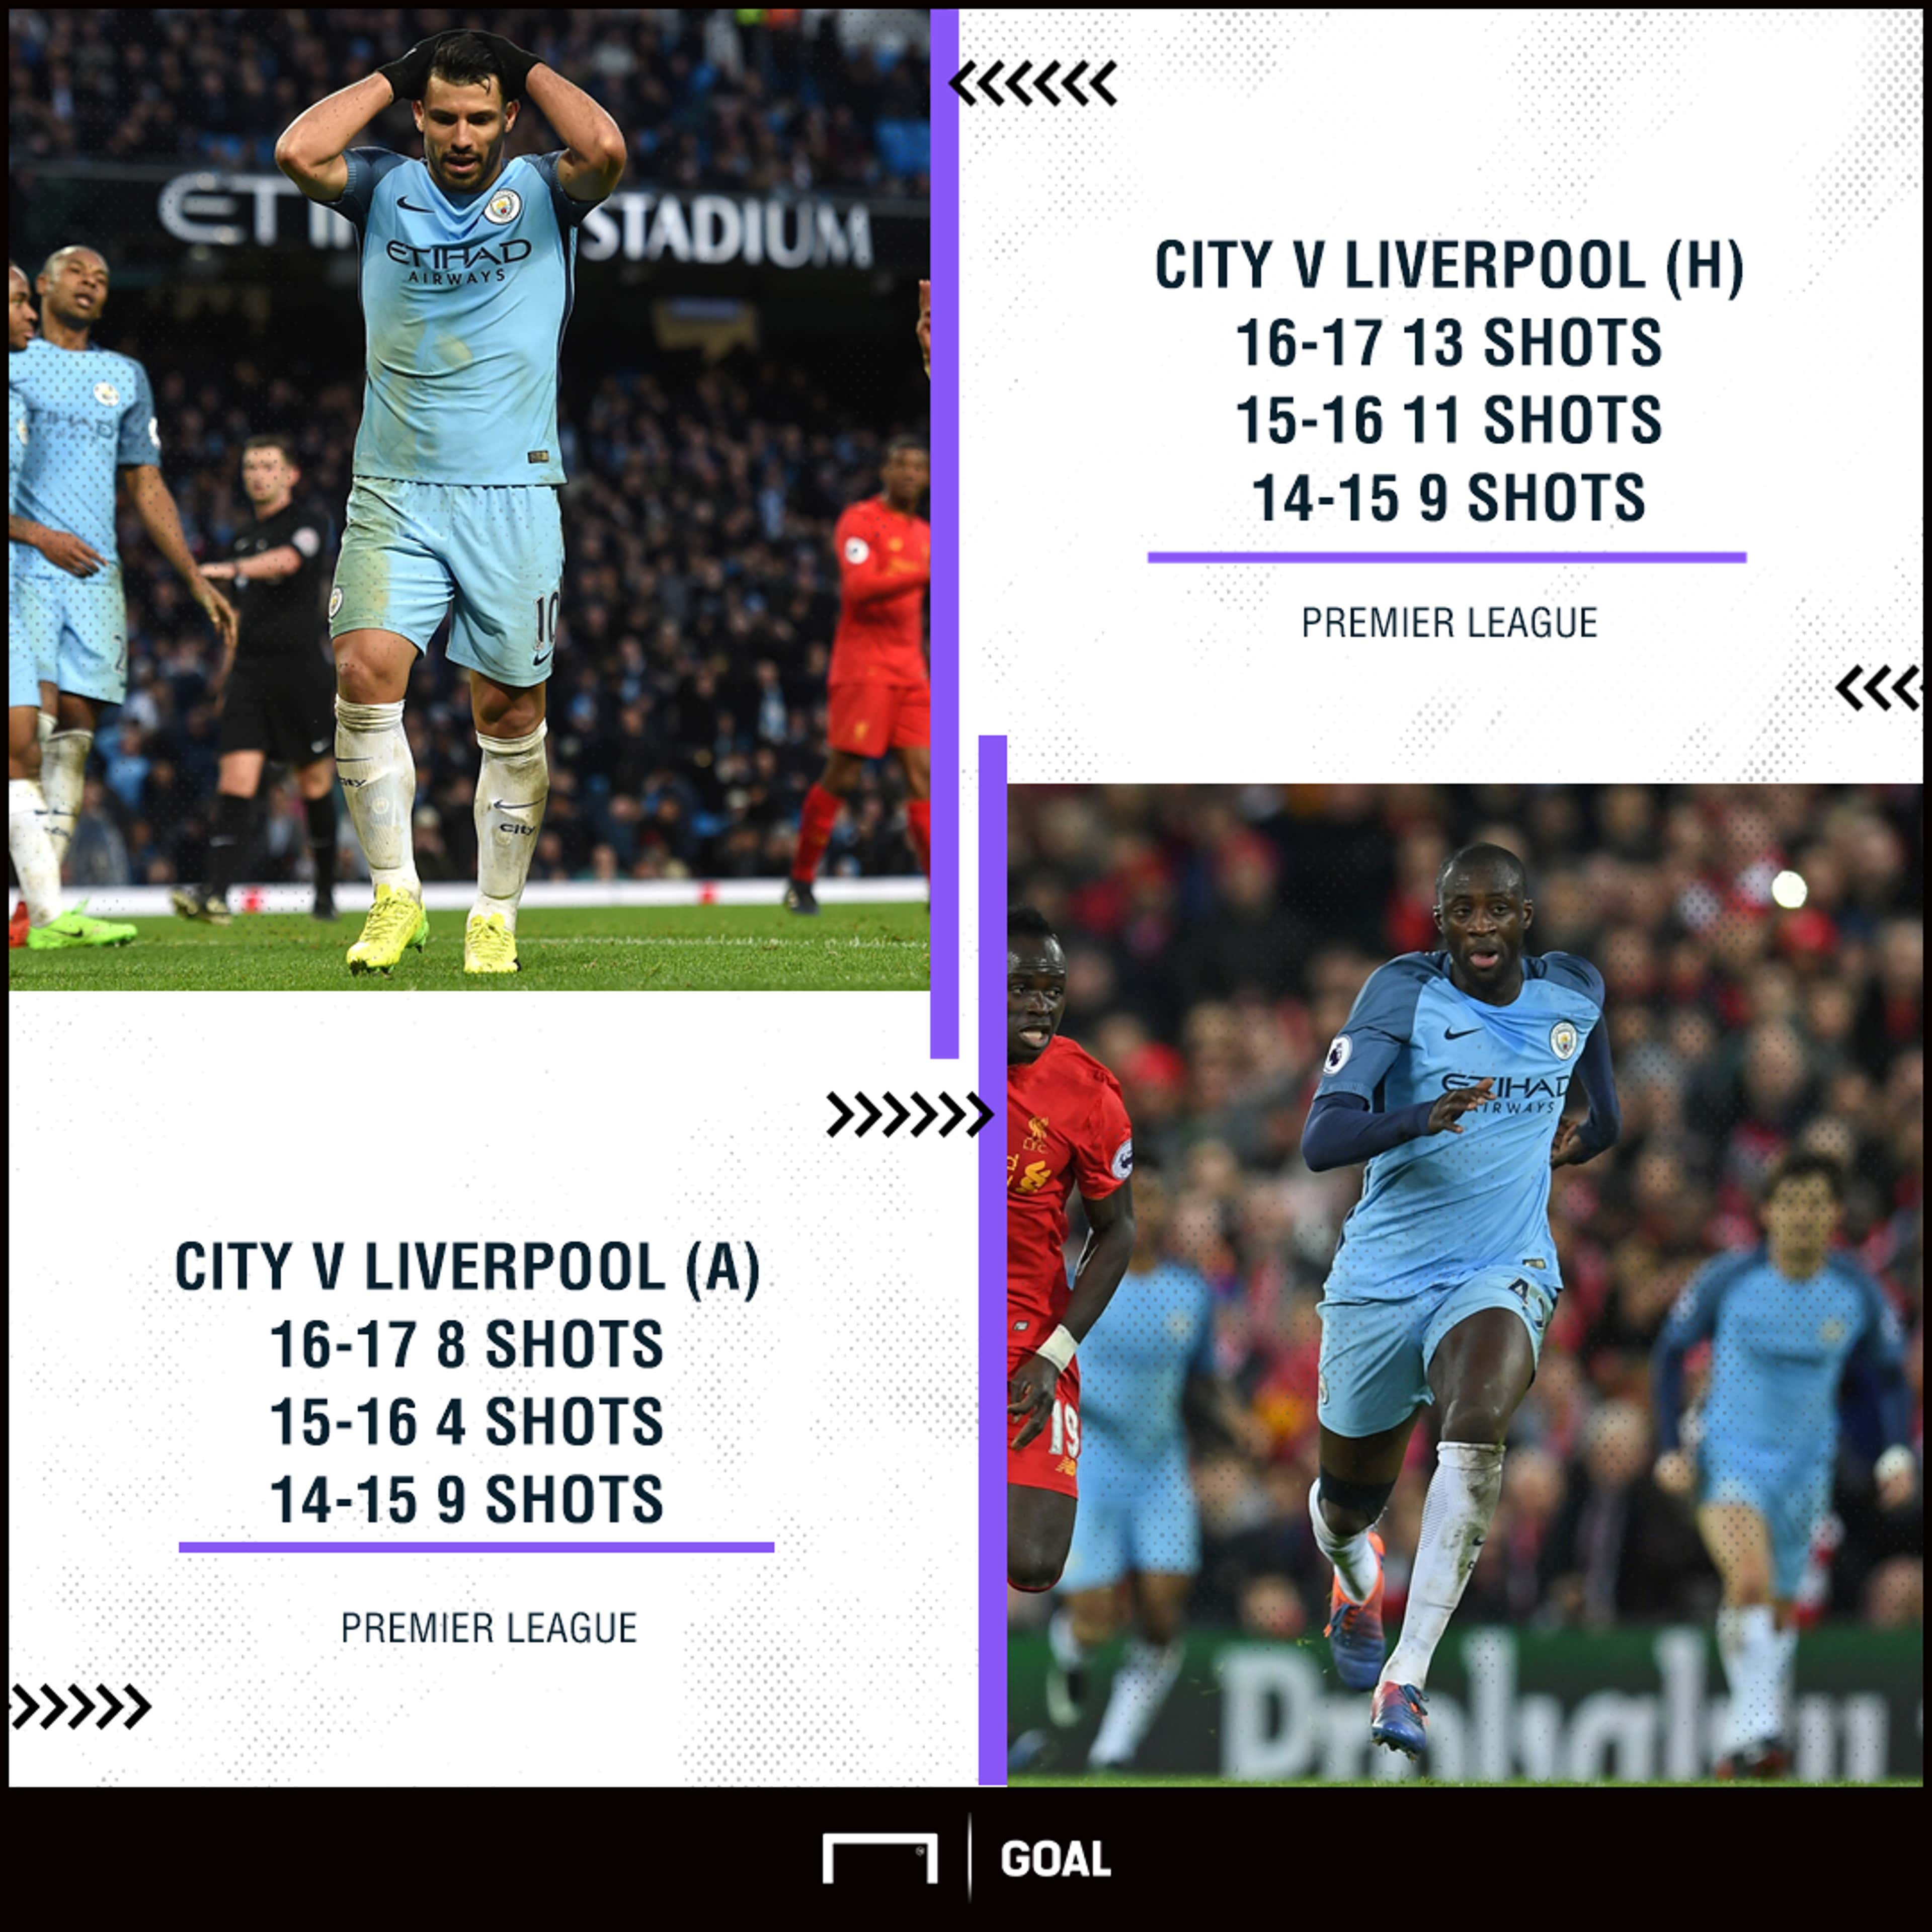 Manchester City v Liverpool shots 14-17